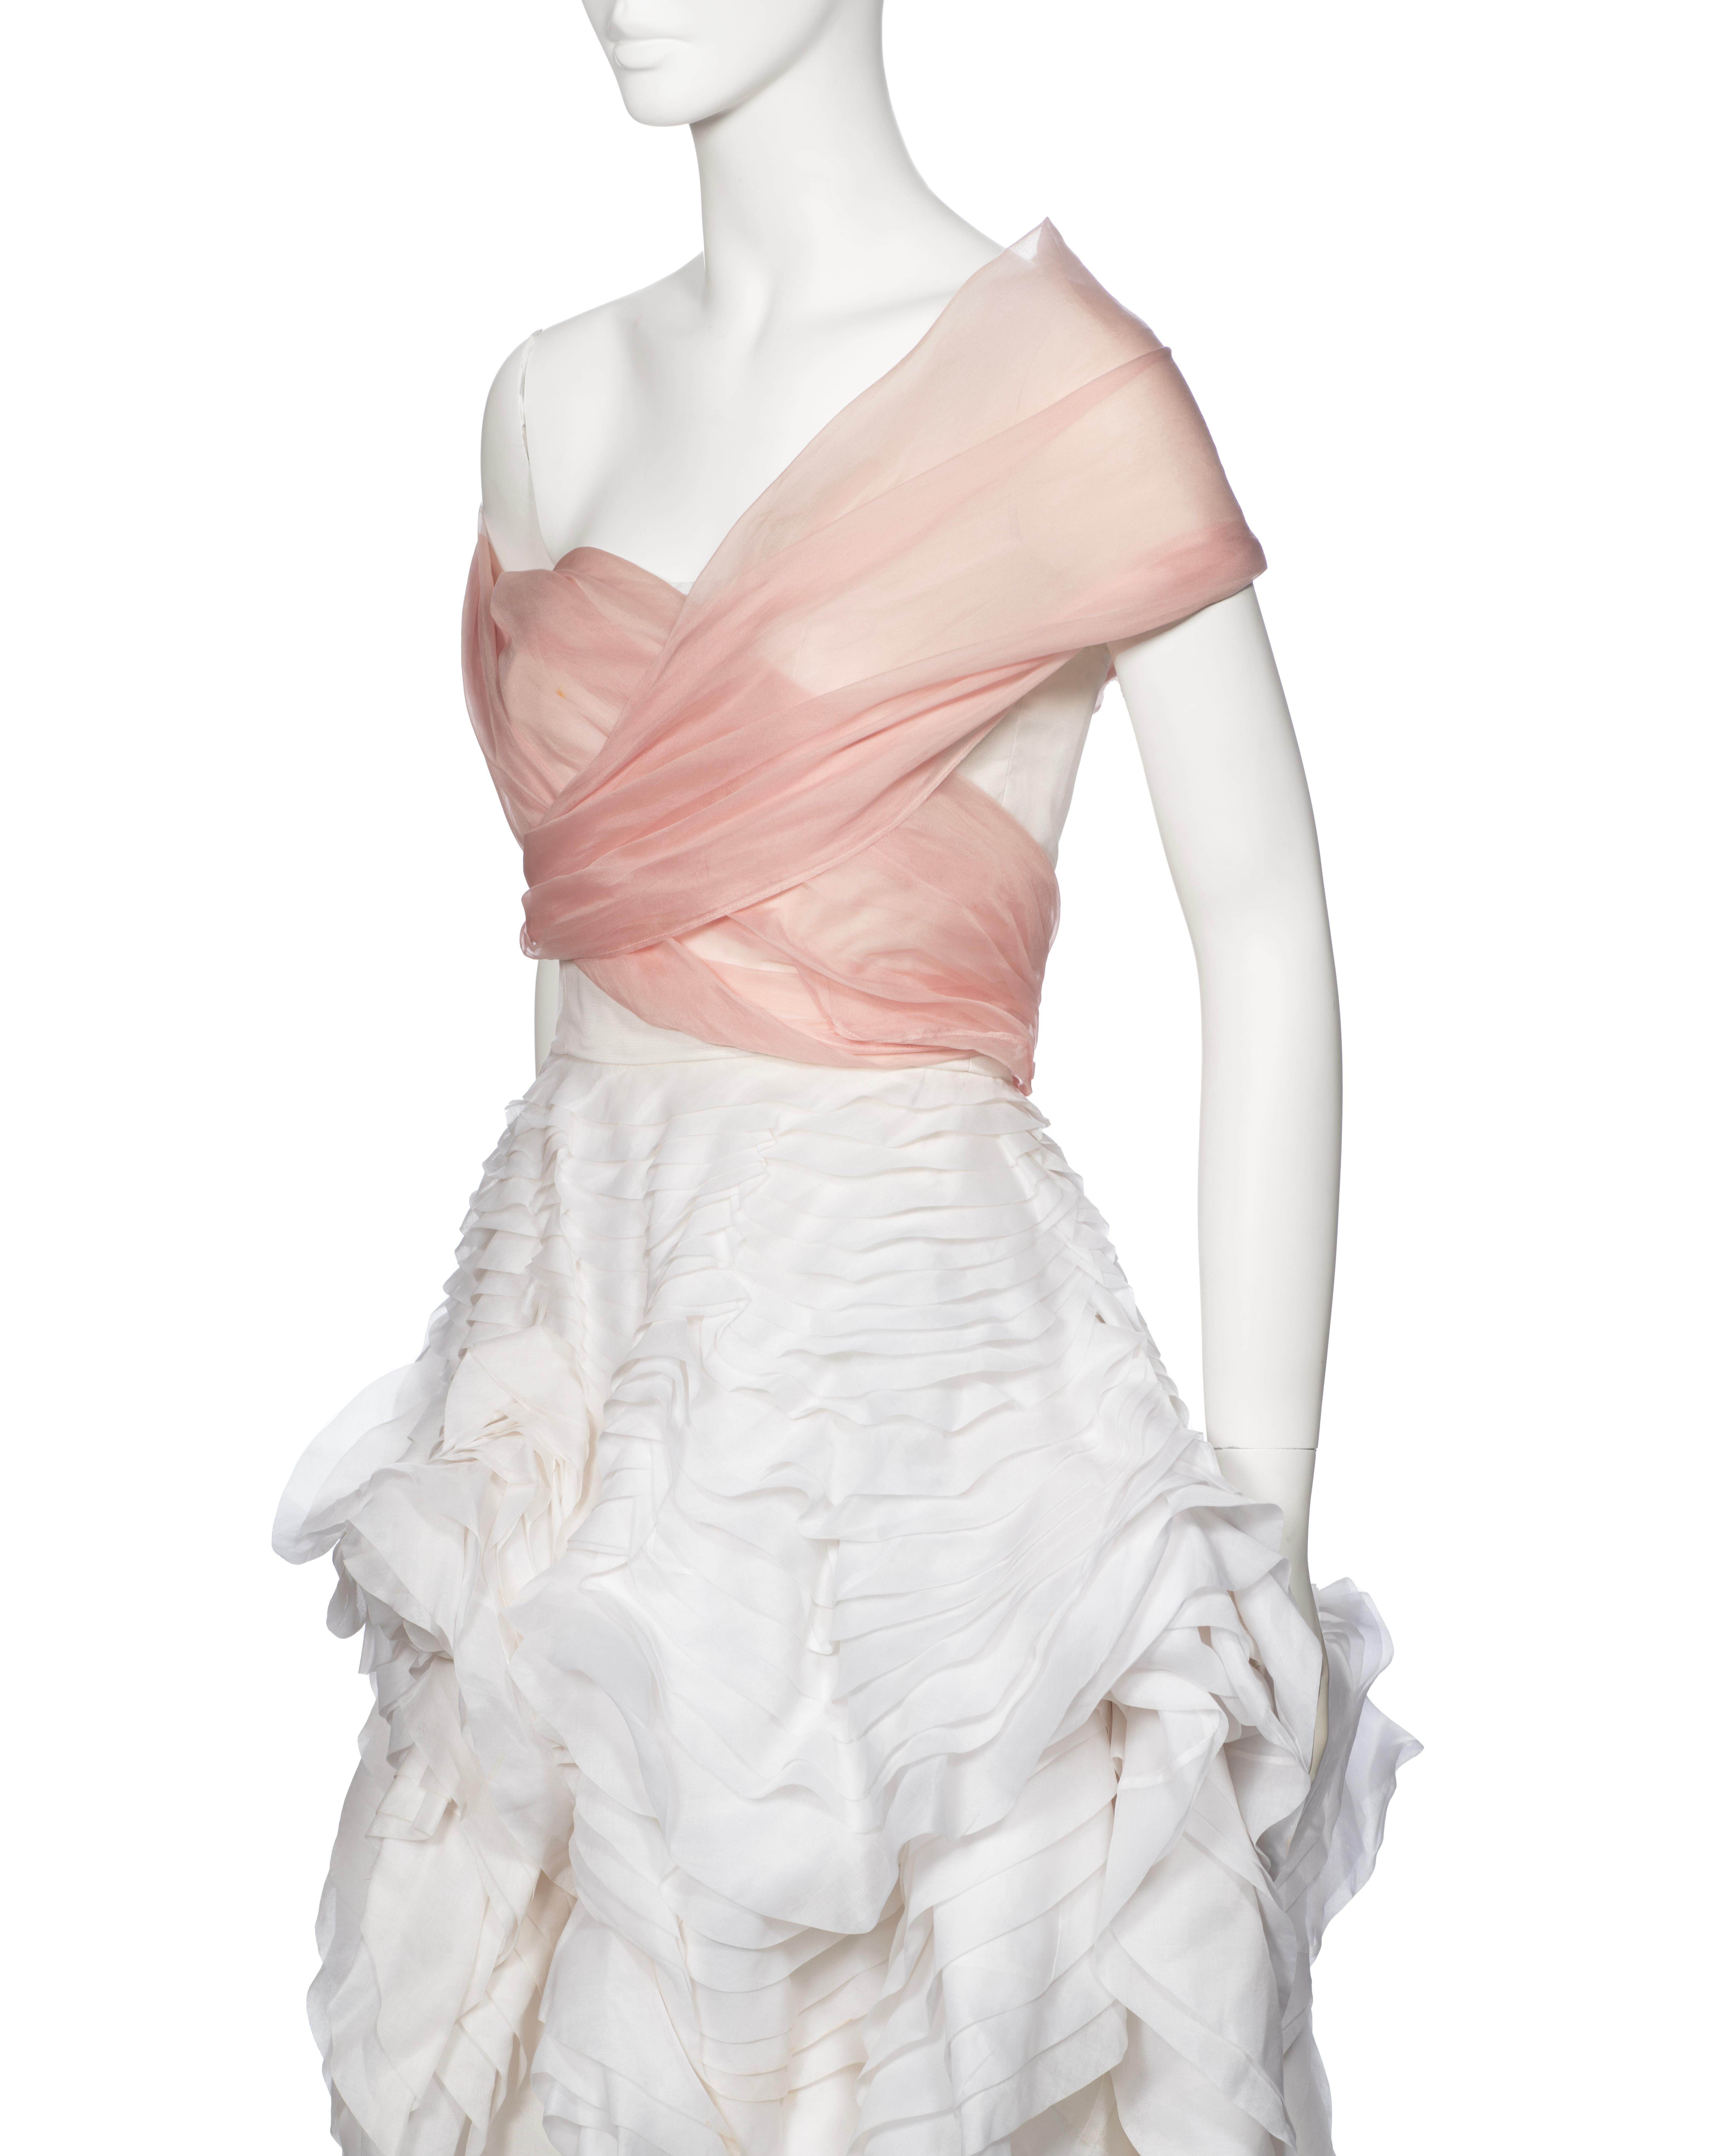 John Galliano Blanche DuBois Clam Dress, ss 1988 For Sale 3